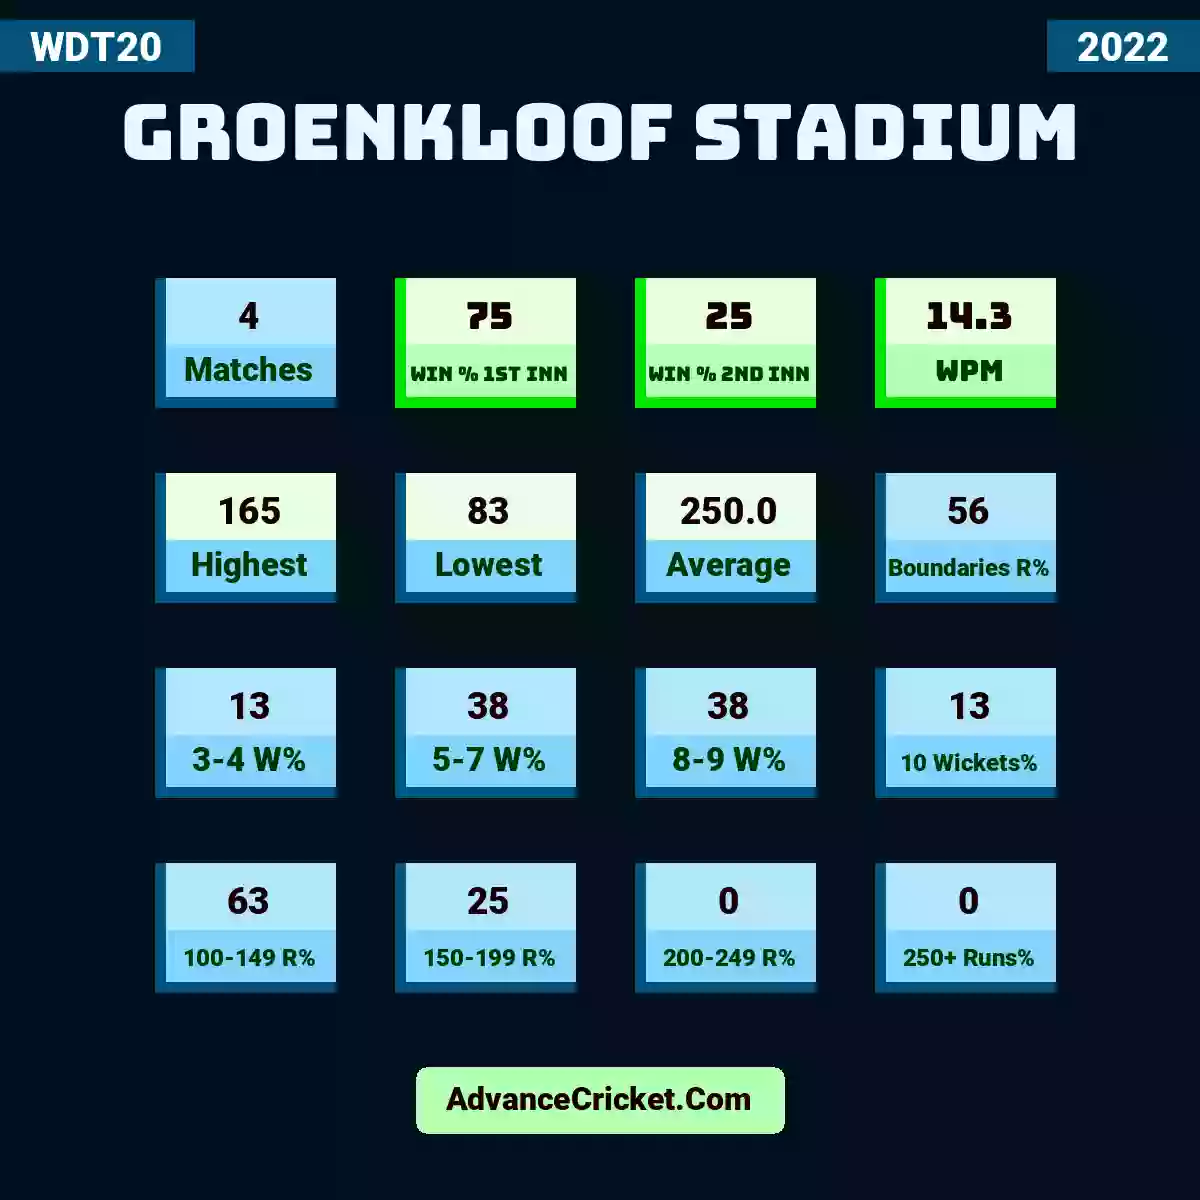 Image showing Groenkloof Stadium with Matches: 4, Win % 1st Inn: 75, Win % 2nd Inn: 25, WPM: 14.3, Highest: 165, Lowest: 83, Average: 250.0, Boundaries R%: 56, 3-4 W%: 13, 5-7 W%: 38, 8-9 W%: 38, 10 Wickets%: 13, 100-149 R%: 63, 150-199 R%: 25, 200-249 R%: 0, 250+ Runs%: 0.